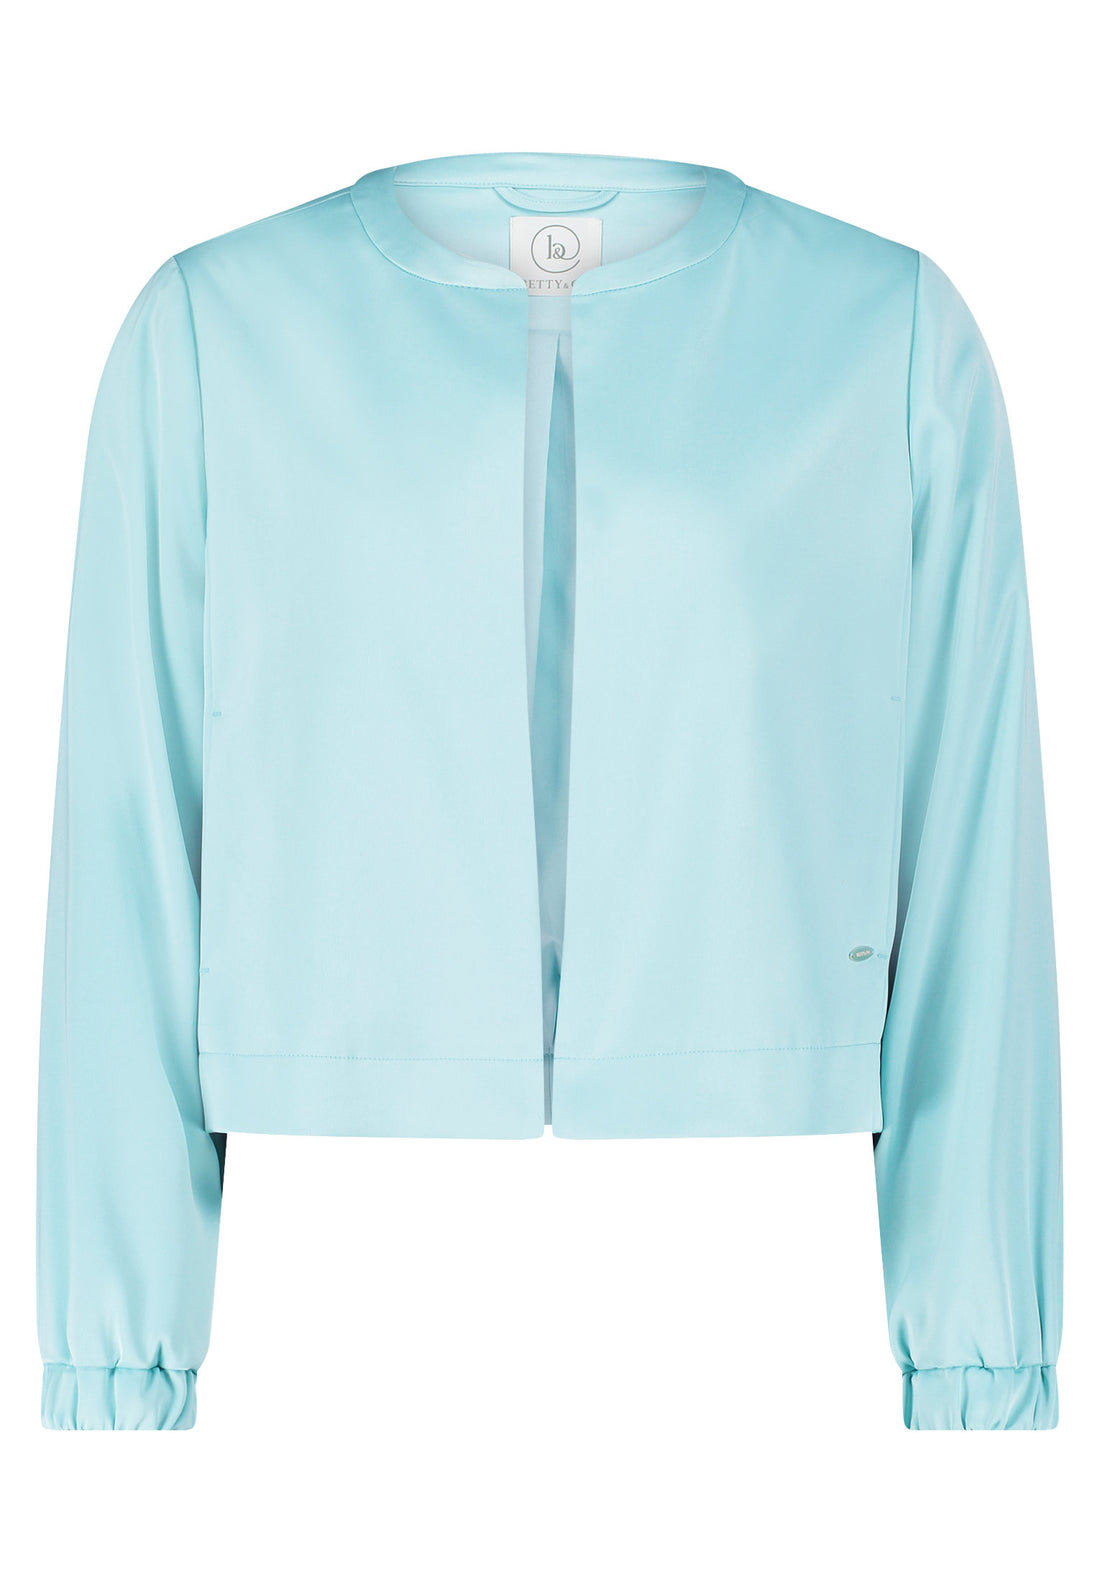 Blazer Jacket In Plain Colors